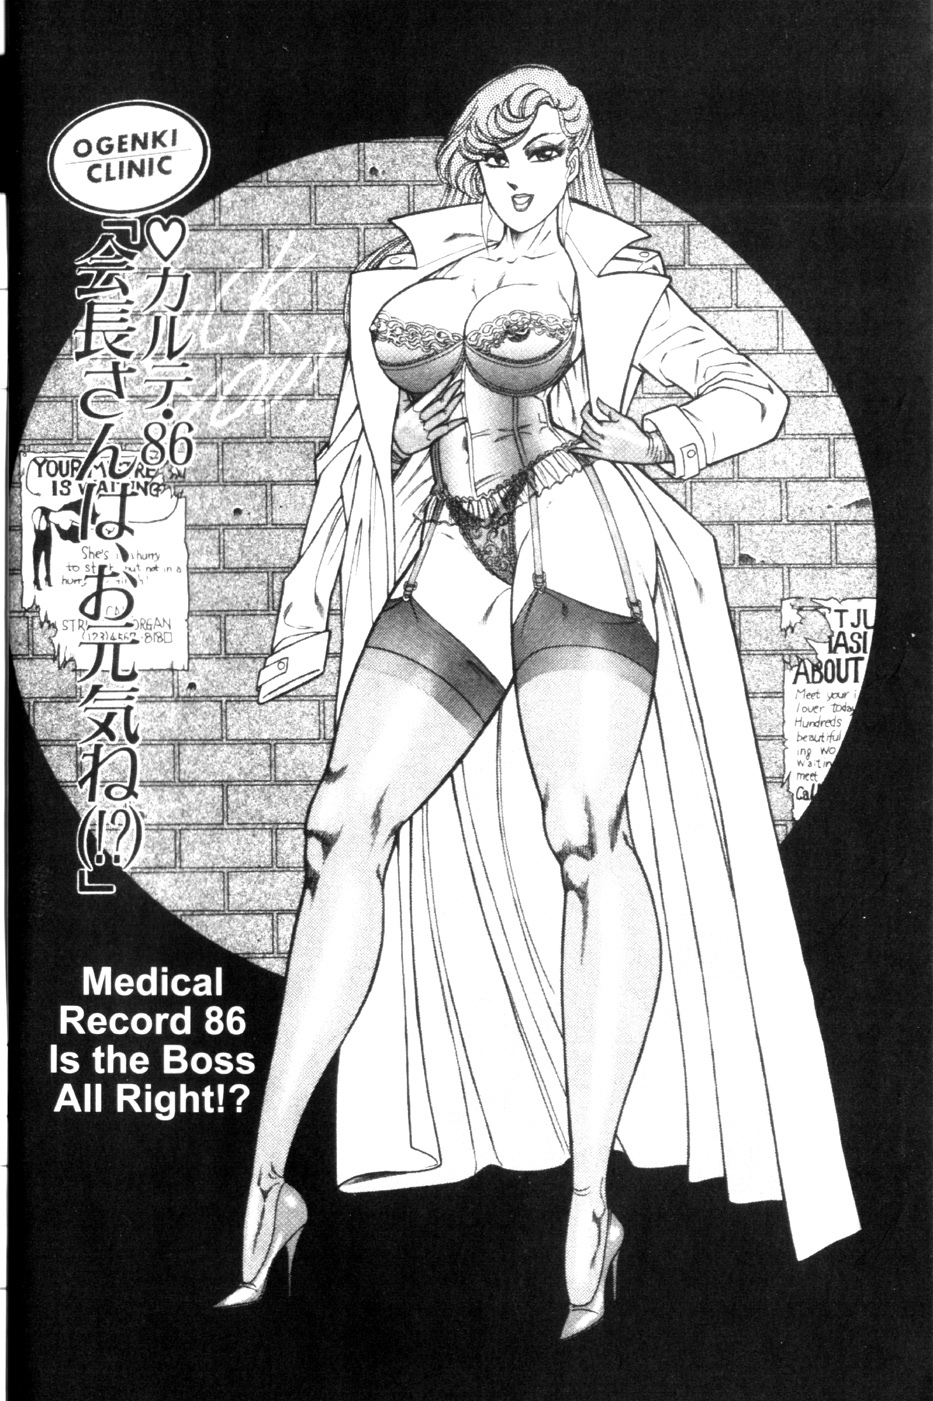 Ogenki Clinic Vol.6 149 hentai manga